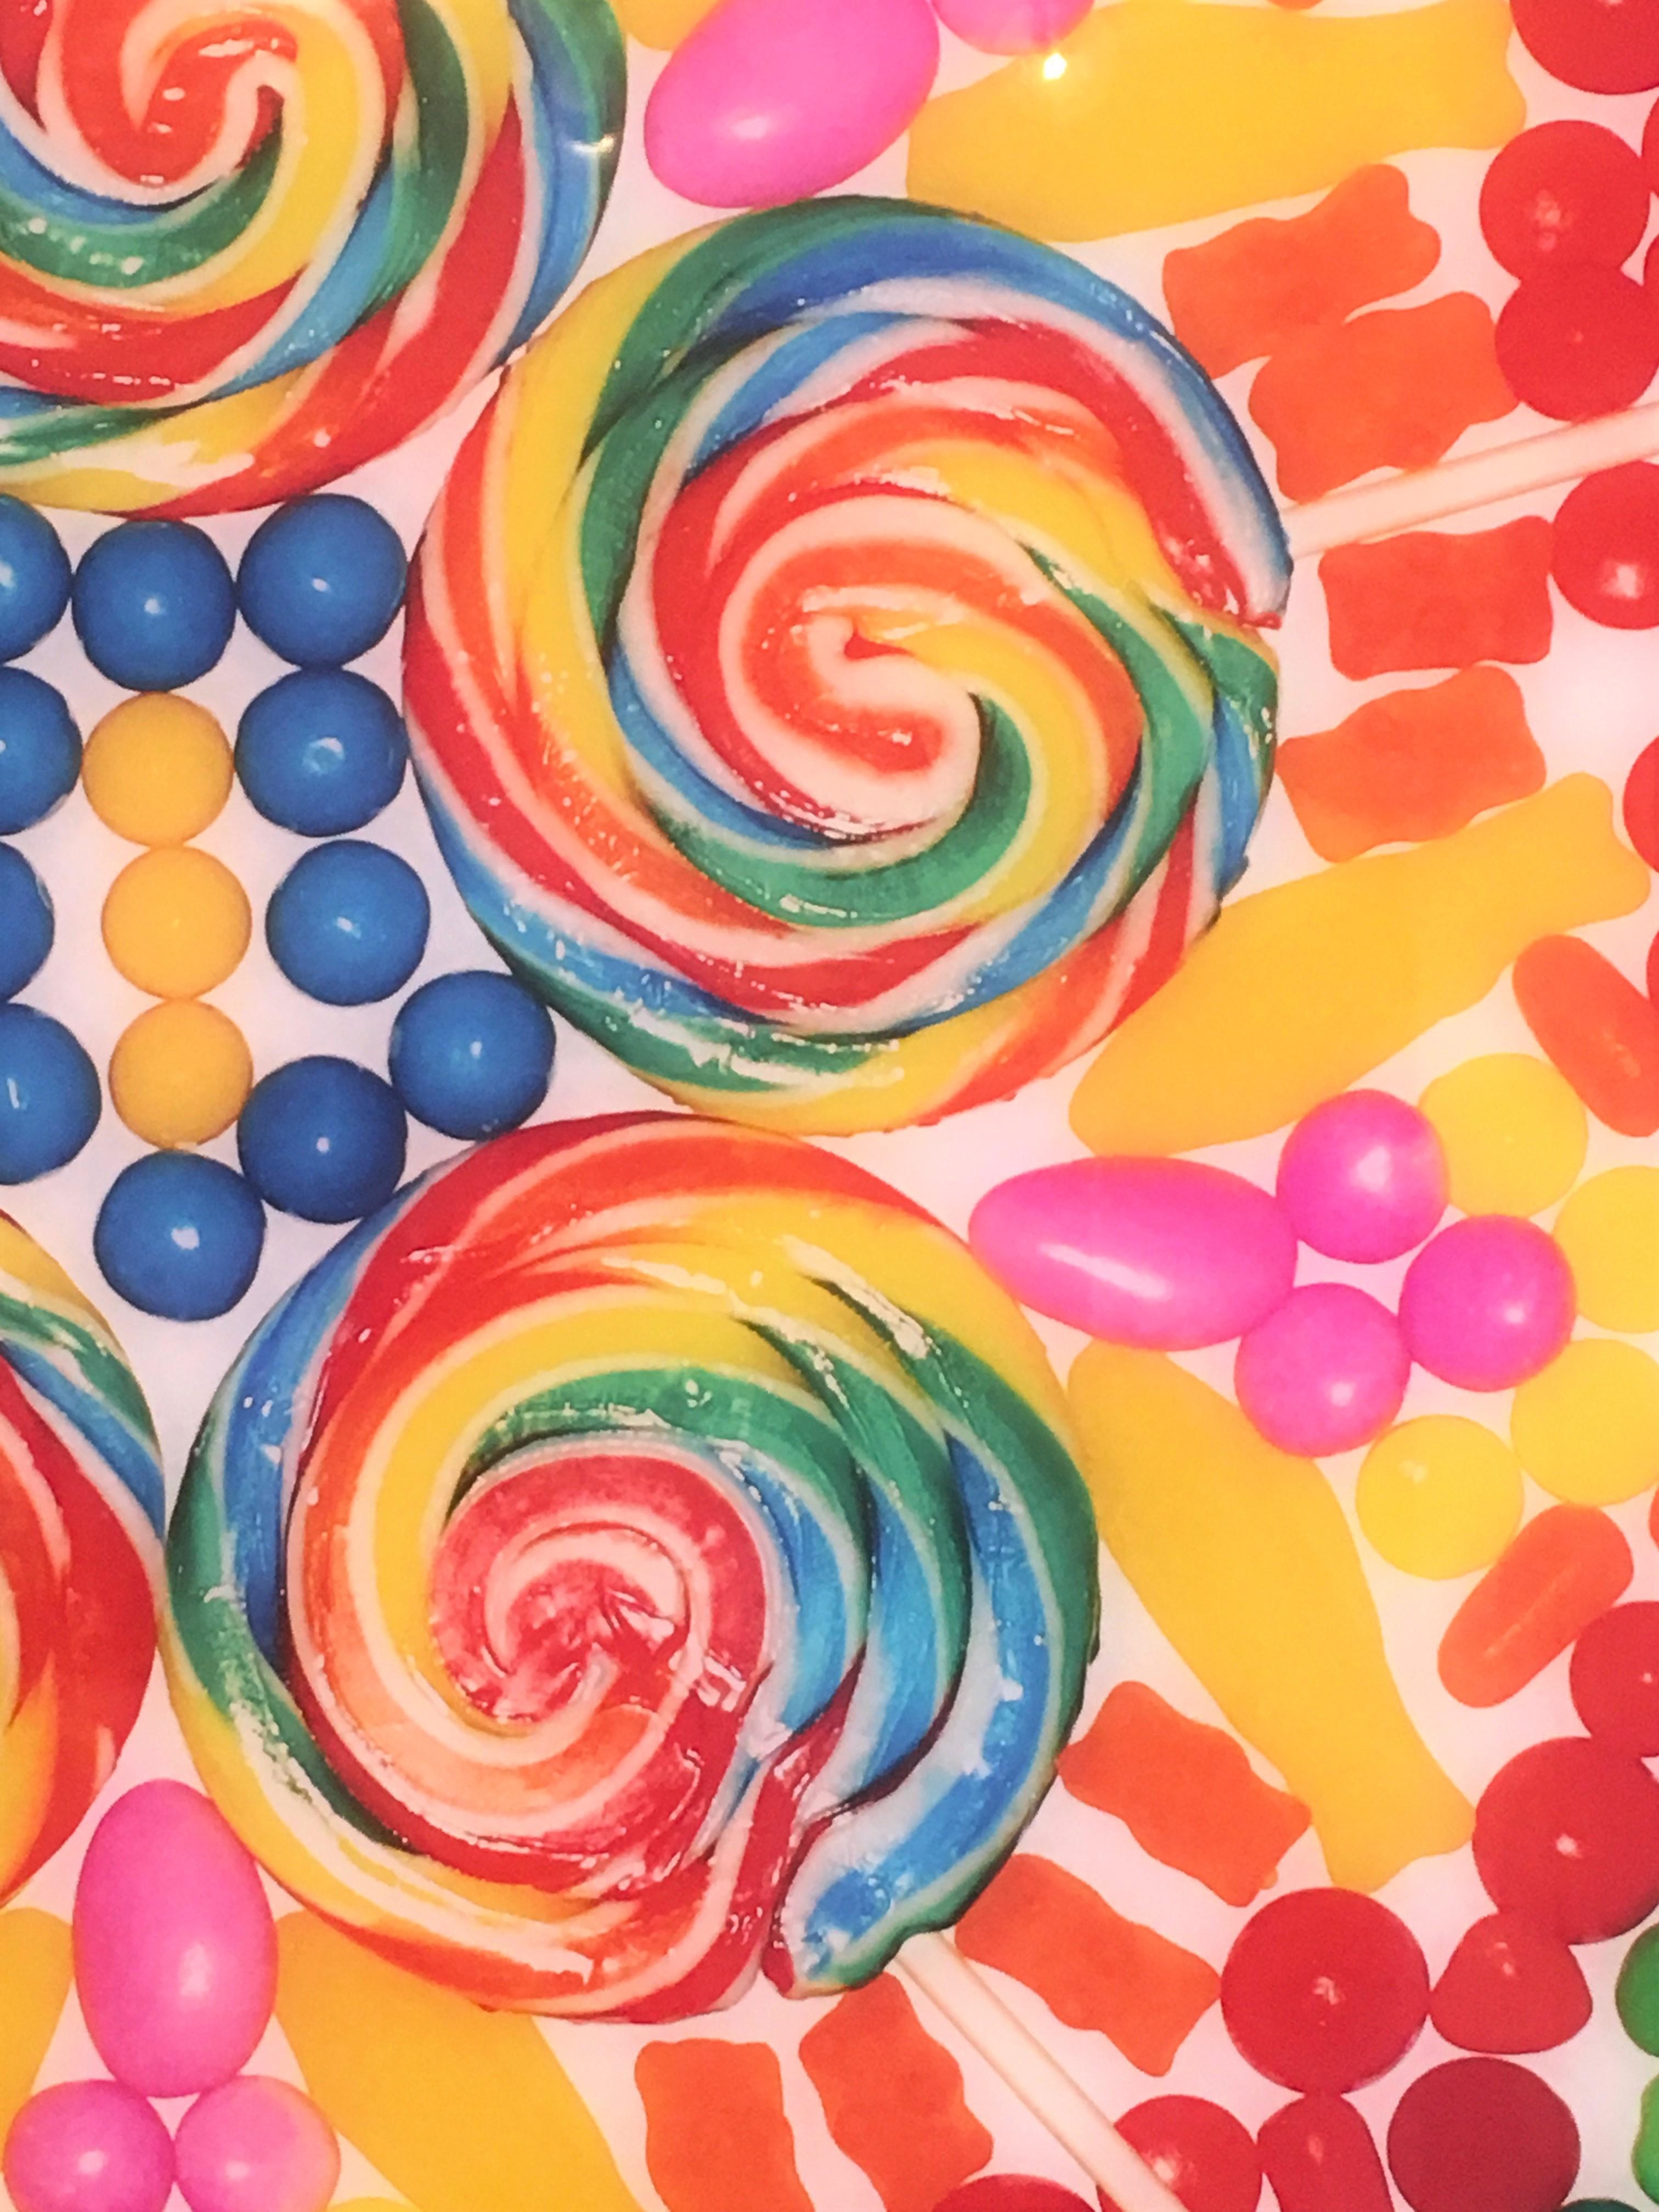 Whirly Pop, Lollipops, Candy, framed, Kids Room, Kids Decor, Fun,  Photograph - Orange Color Photograph by Paula Brett